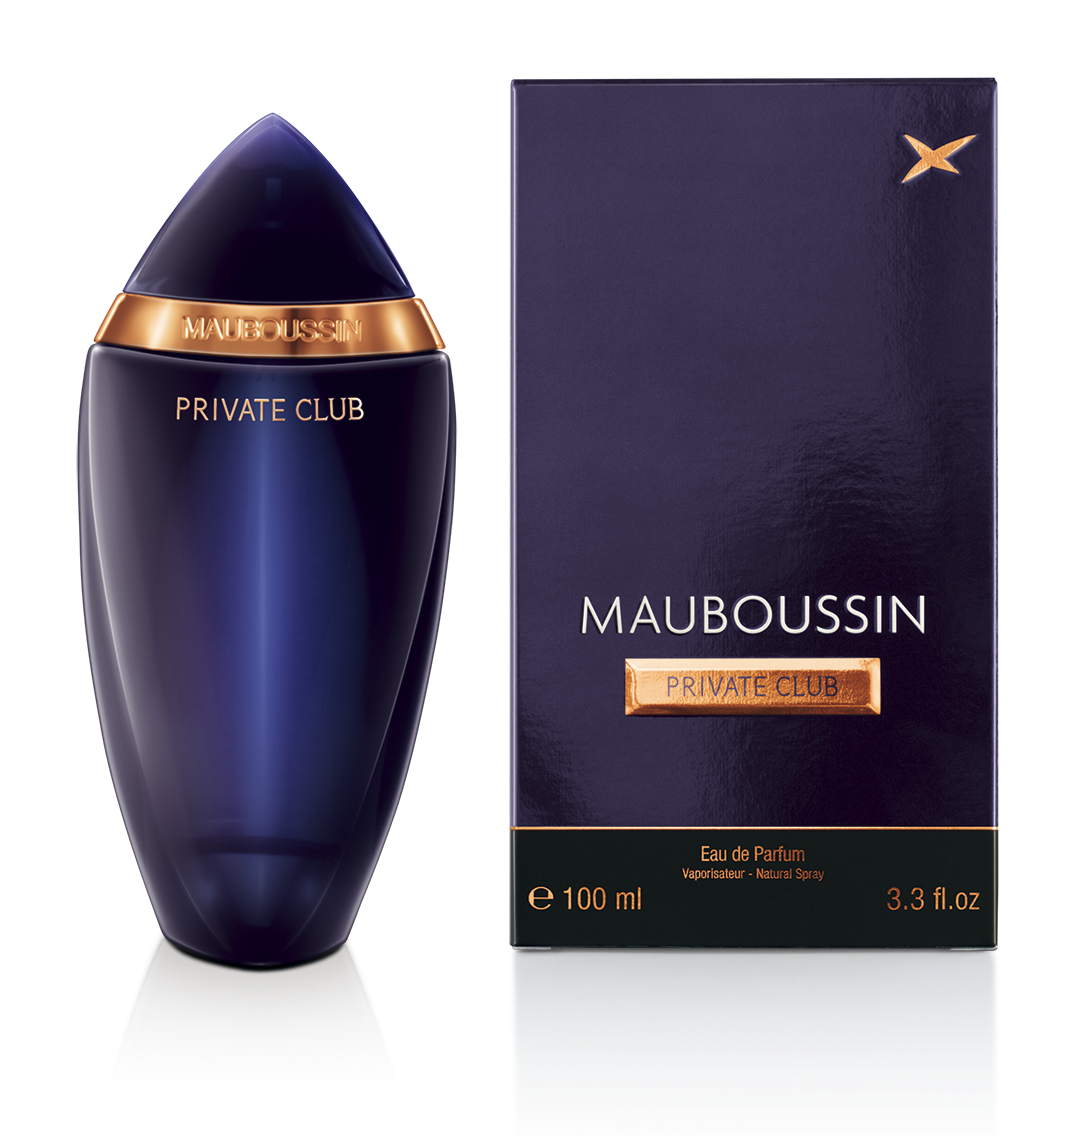 Mauboussin Private Club eau de parfum 100ml